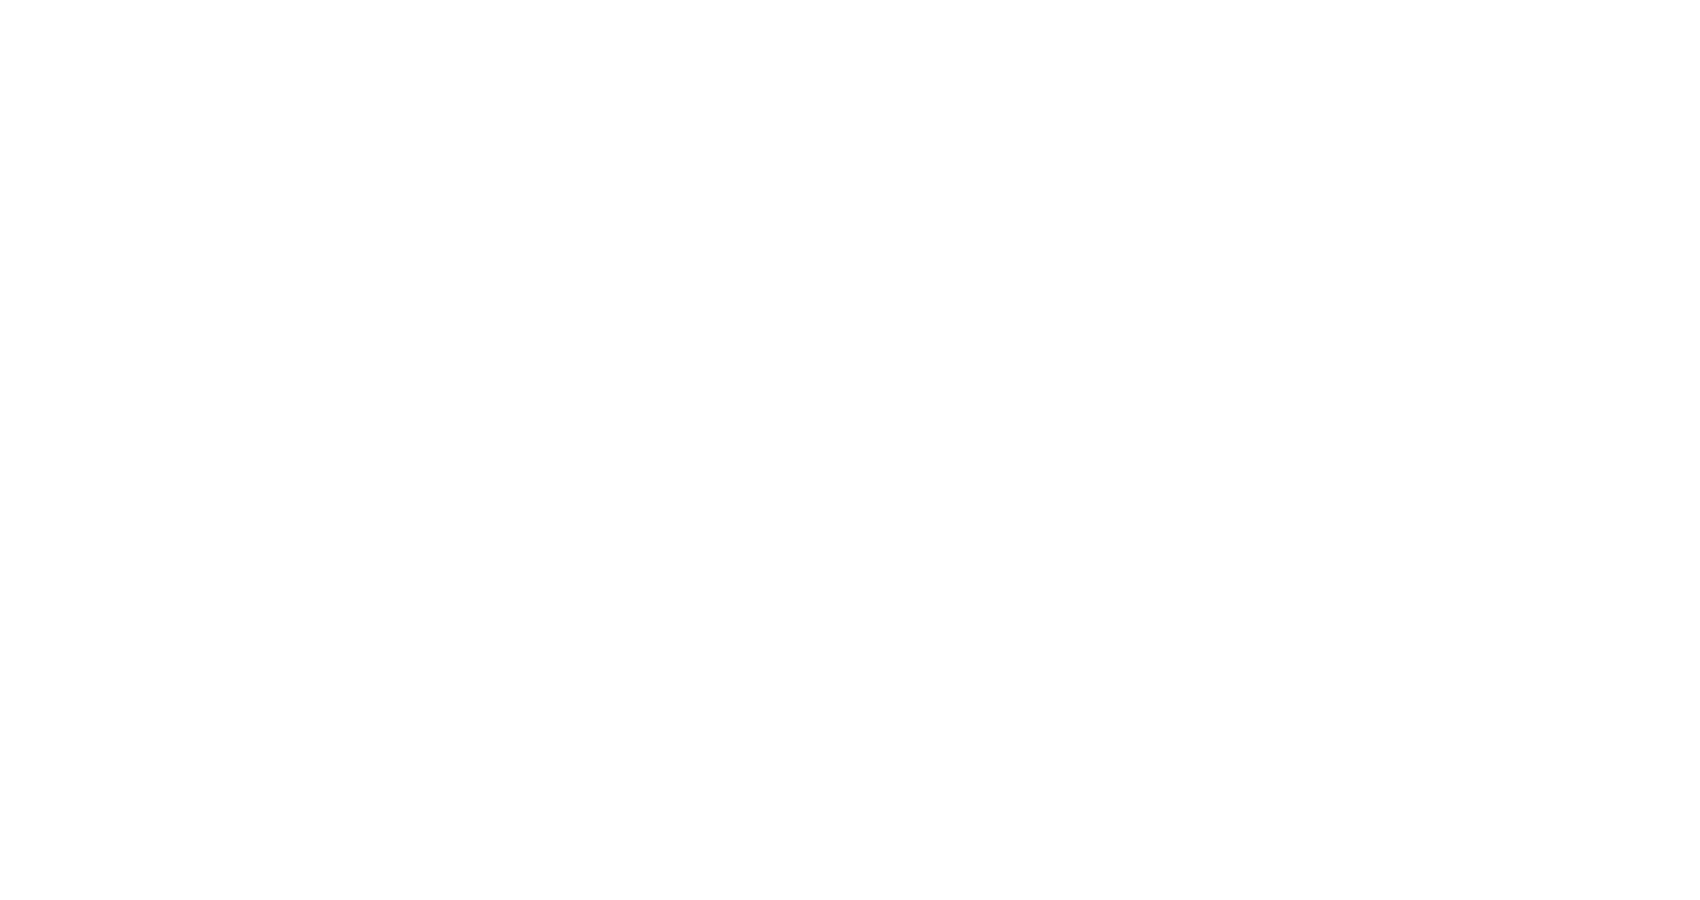 quickbooks-logo-logodix.png